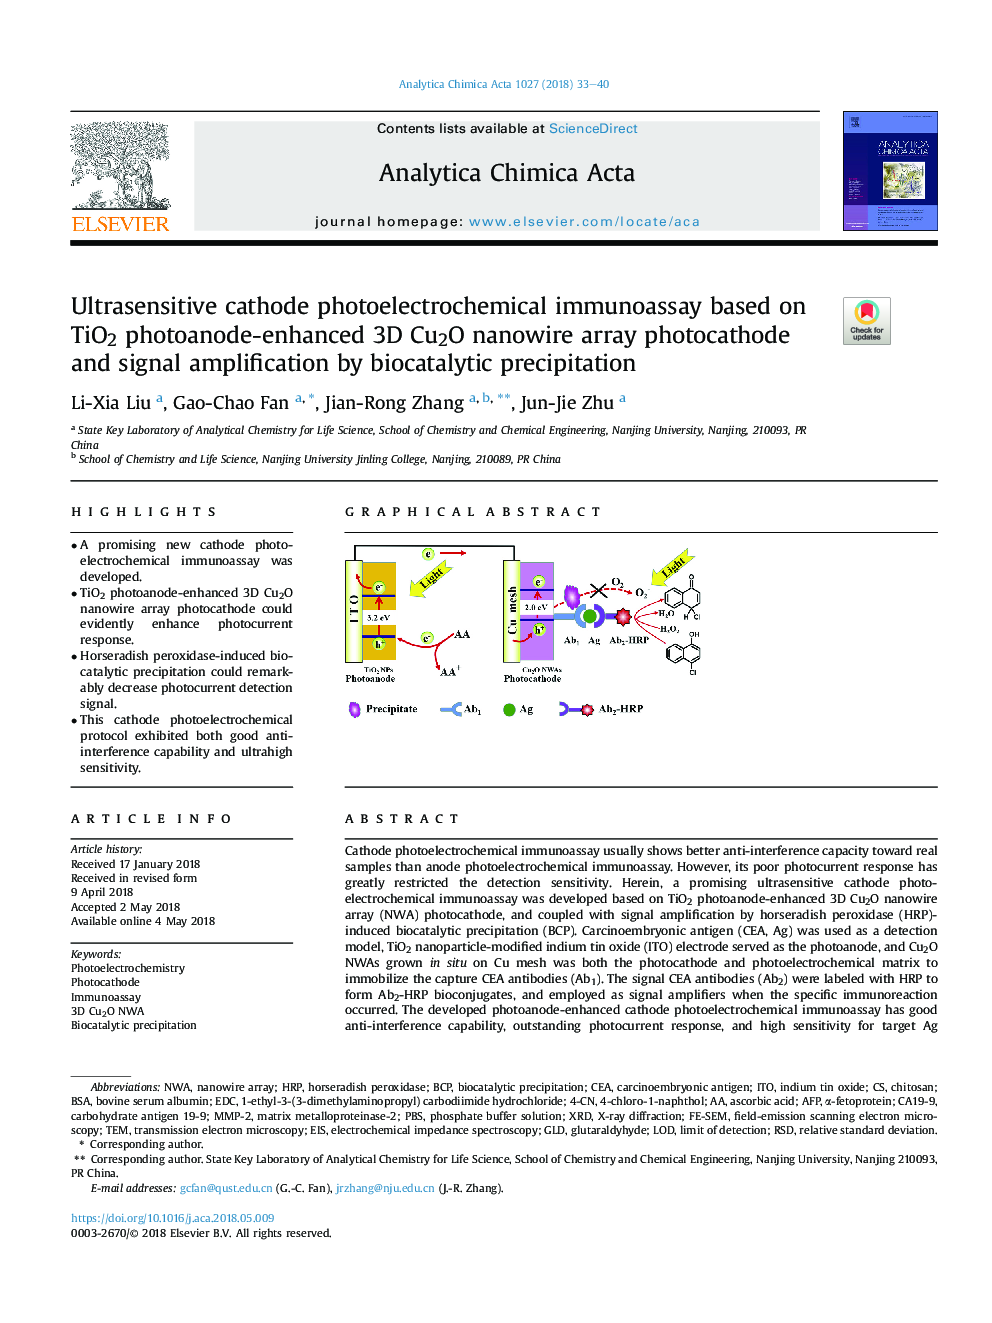 Ultrasensitive cathode photoelectrochemical immunoassay based on TiO2 photoanode-enhanced 3D Cu2O nanowire array photocathode and signal amplification by biocatalytic precipitation